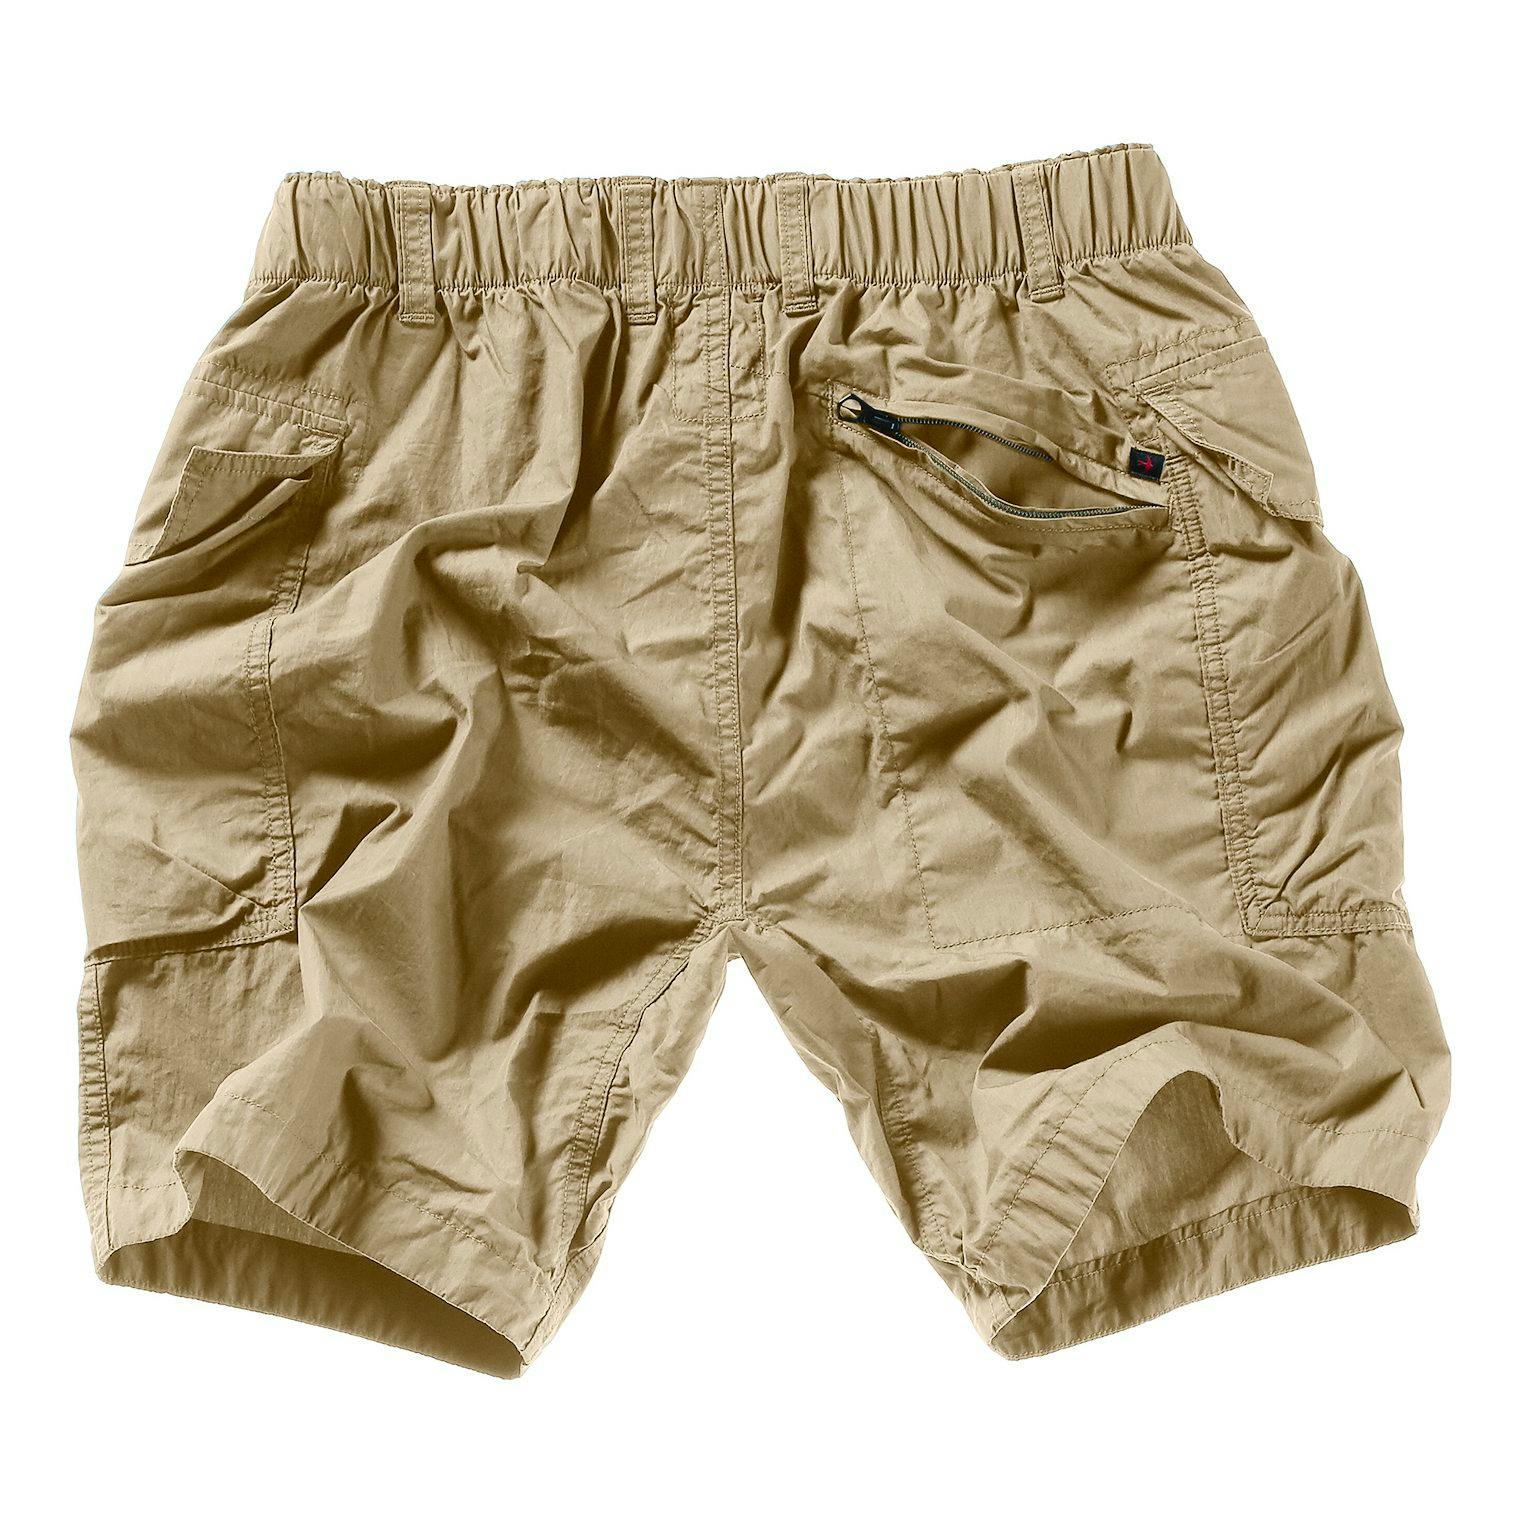 RELWEN Cotton Nylon Commando Shorts